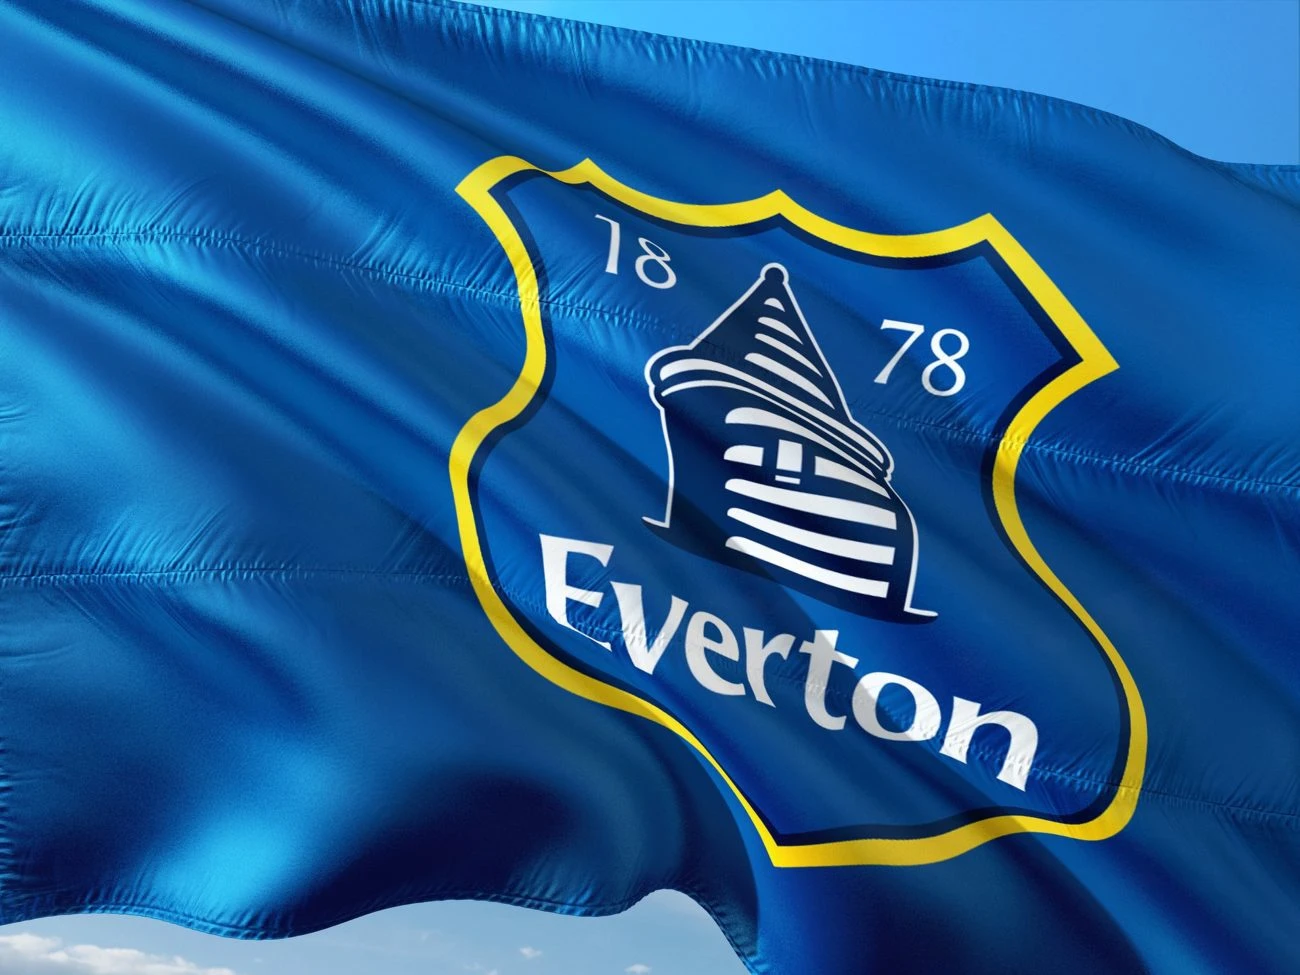 Everton FC announces partnership with i8.Bet - Marketing & affiliates - iGB